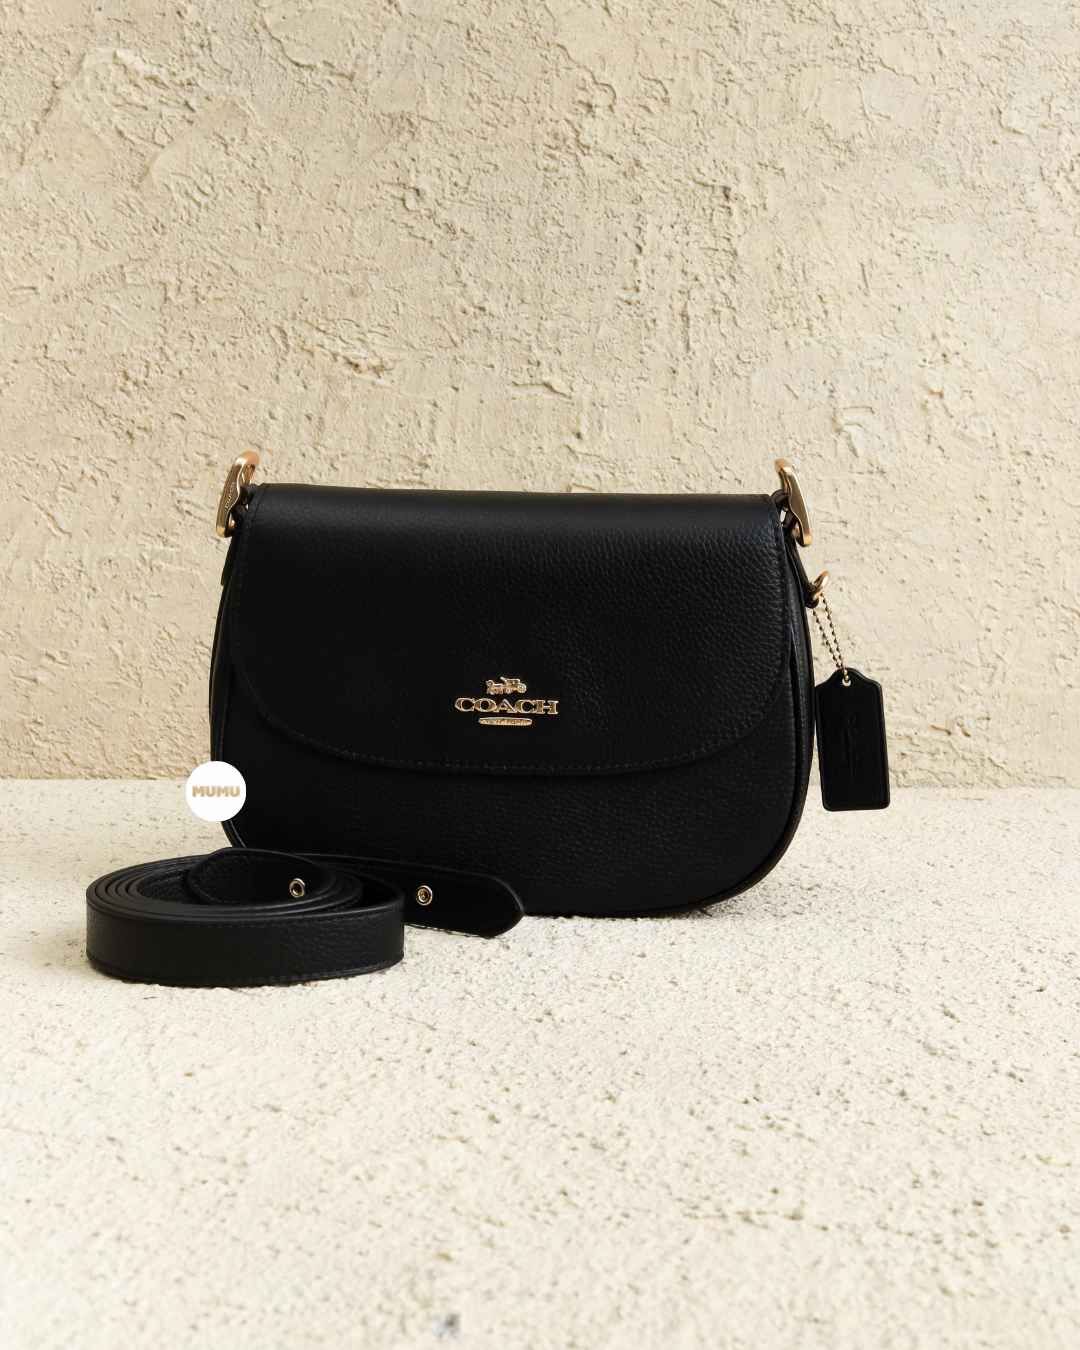 Coach Macie Saddle Bag, Black: Handbags